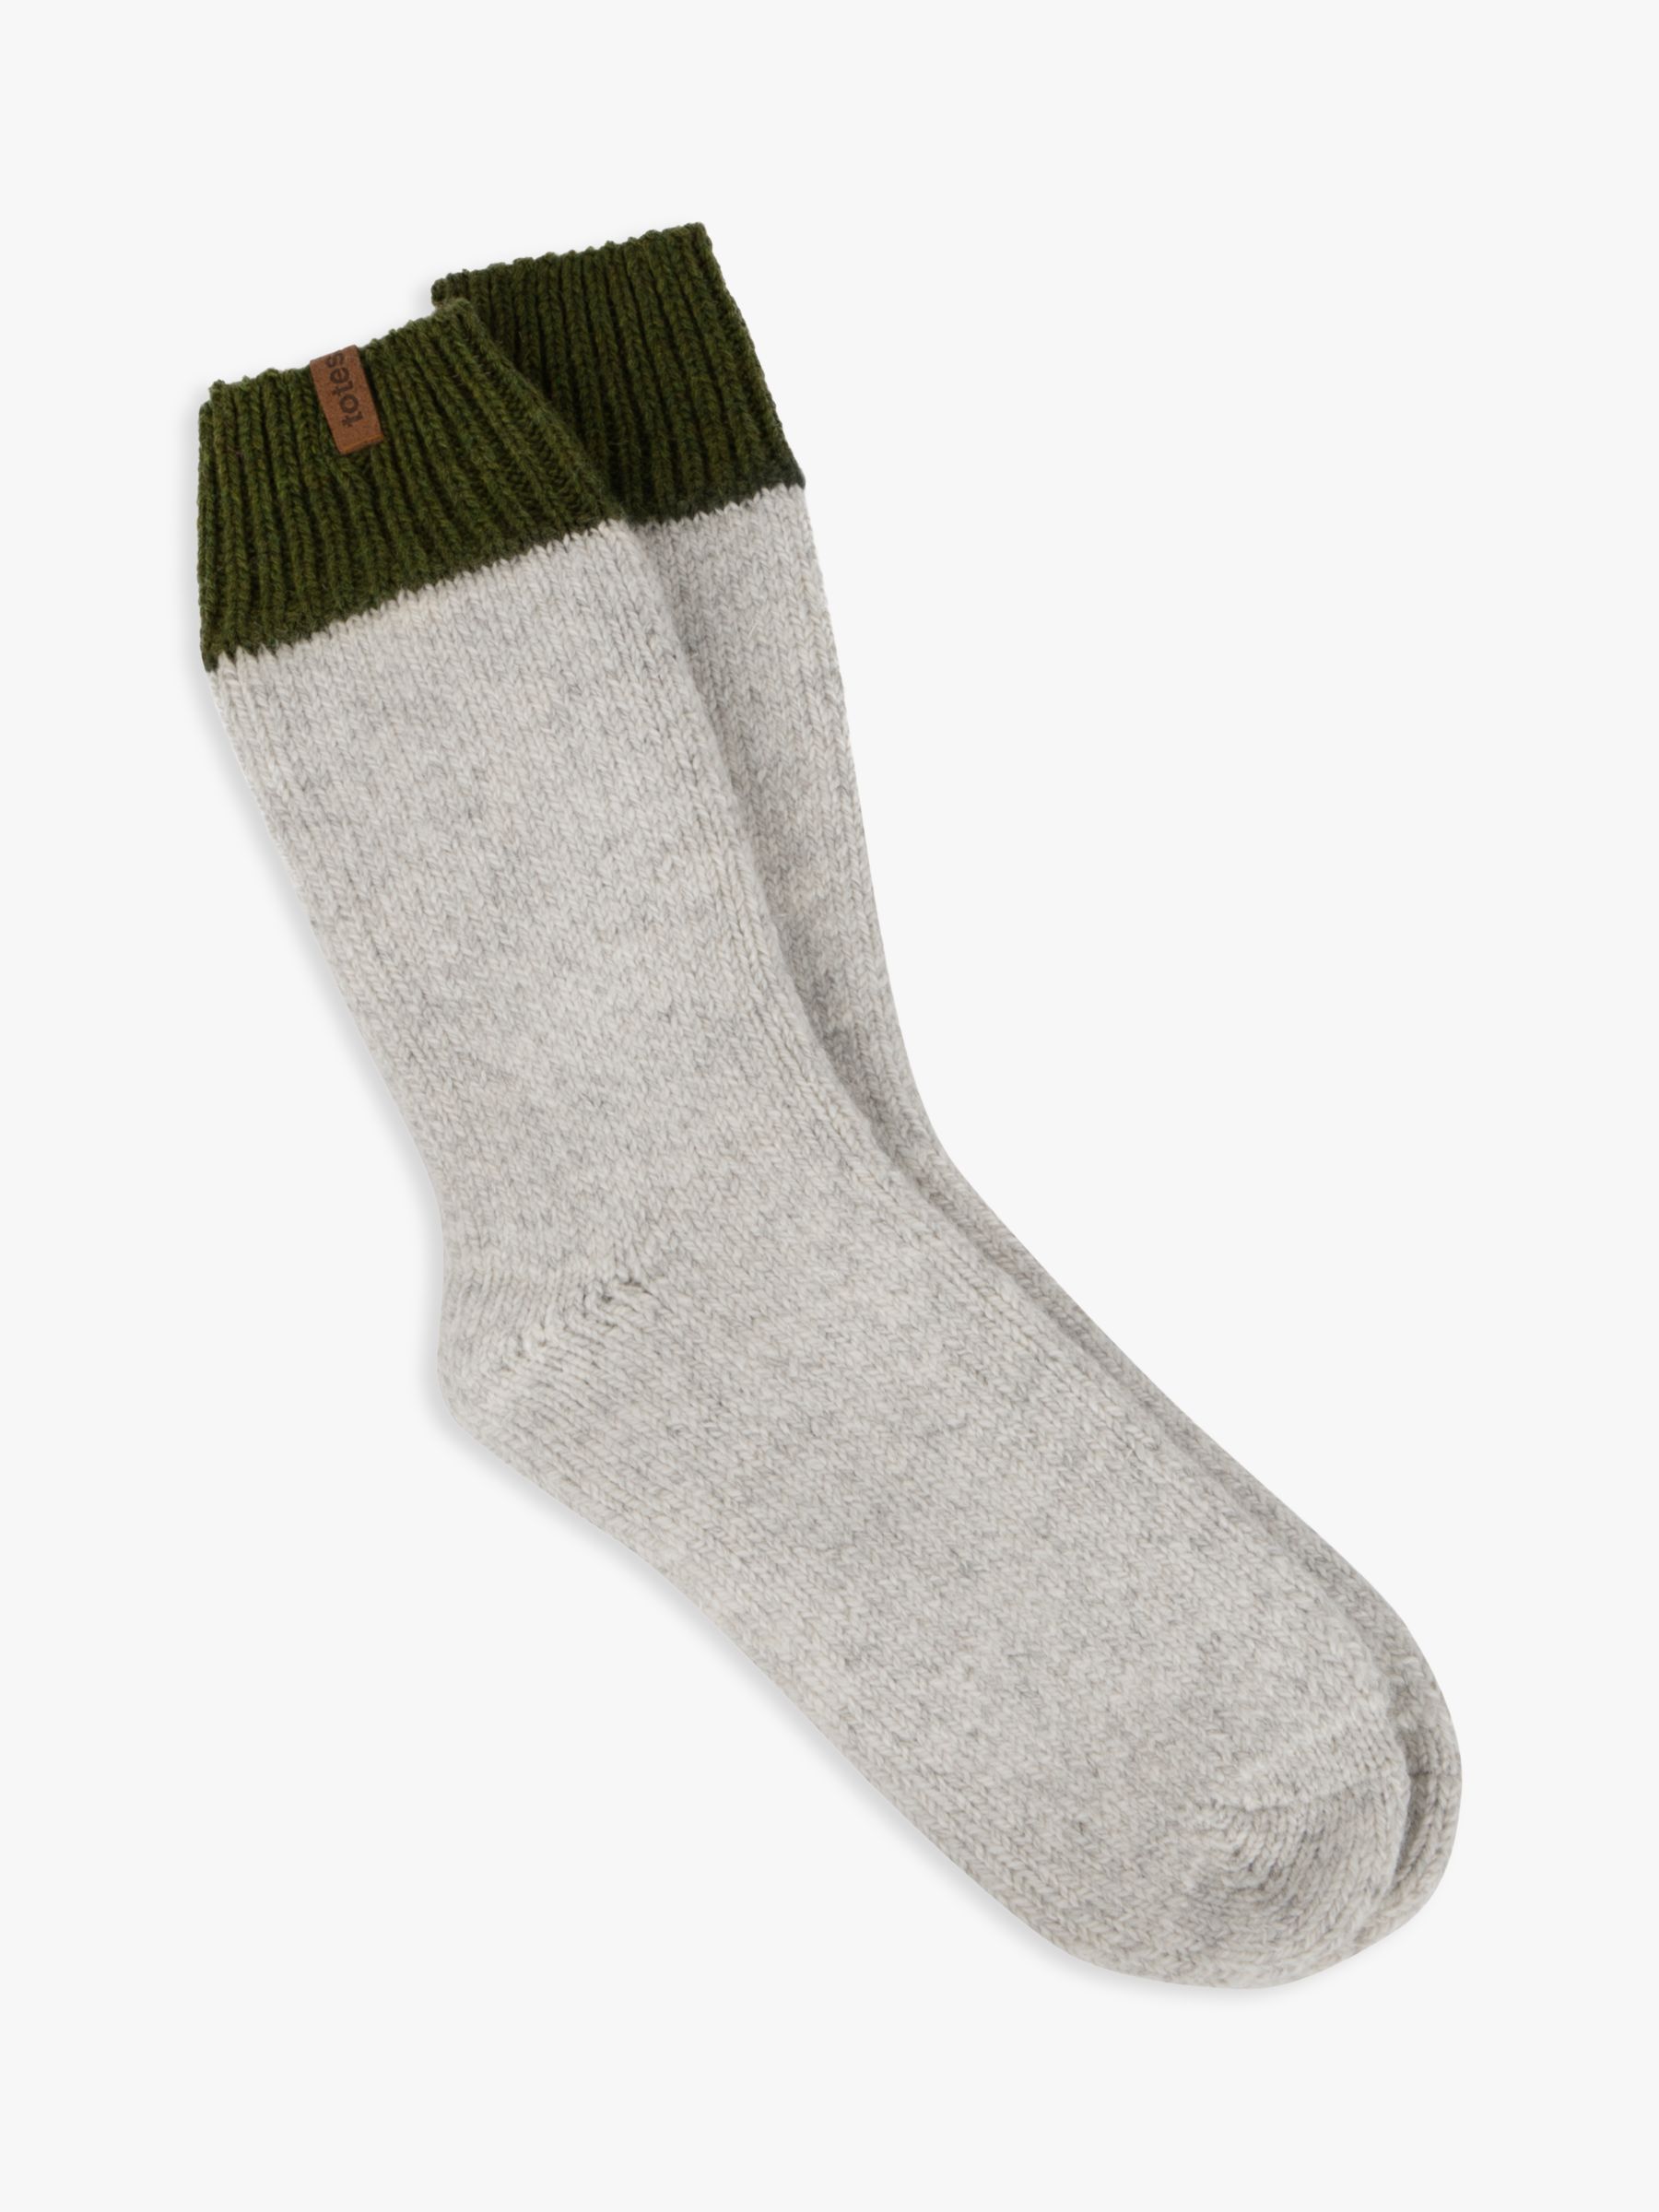 Buy totes Chunky Thermal Wool Blend Socks, Grey/Green Online at johnlewis.com